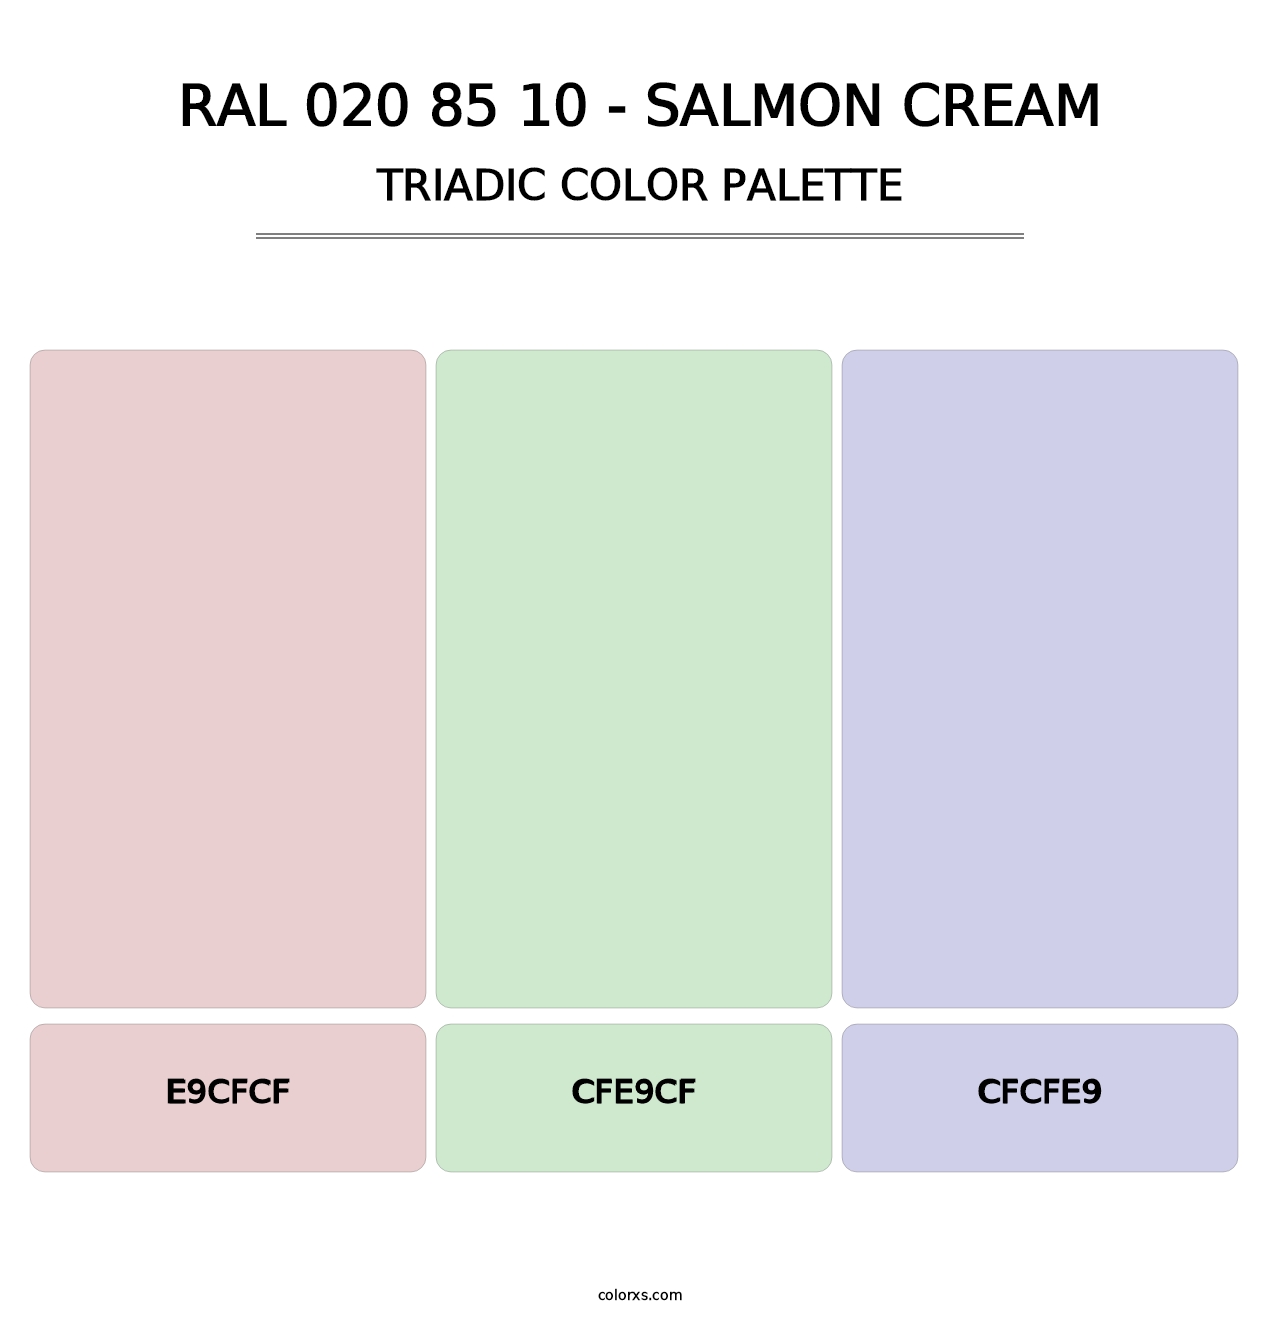 RAL 020 85 10 - Salmon Cream - Triadic Color Palette